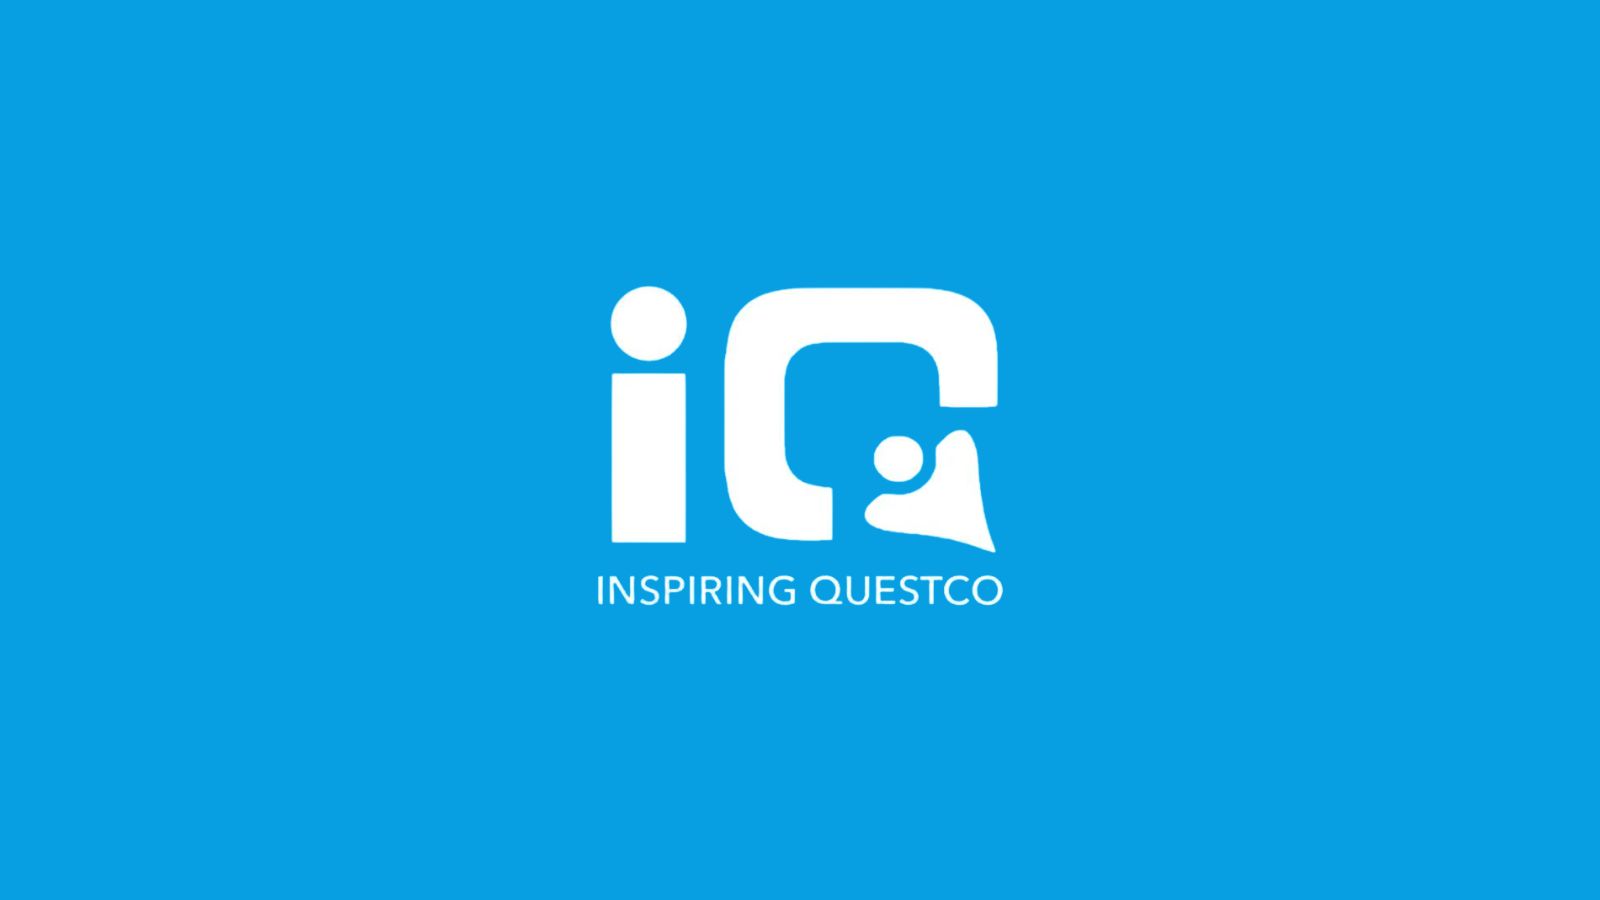 Questco Announces the Launch of Podcast “Inspiring Questco”